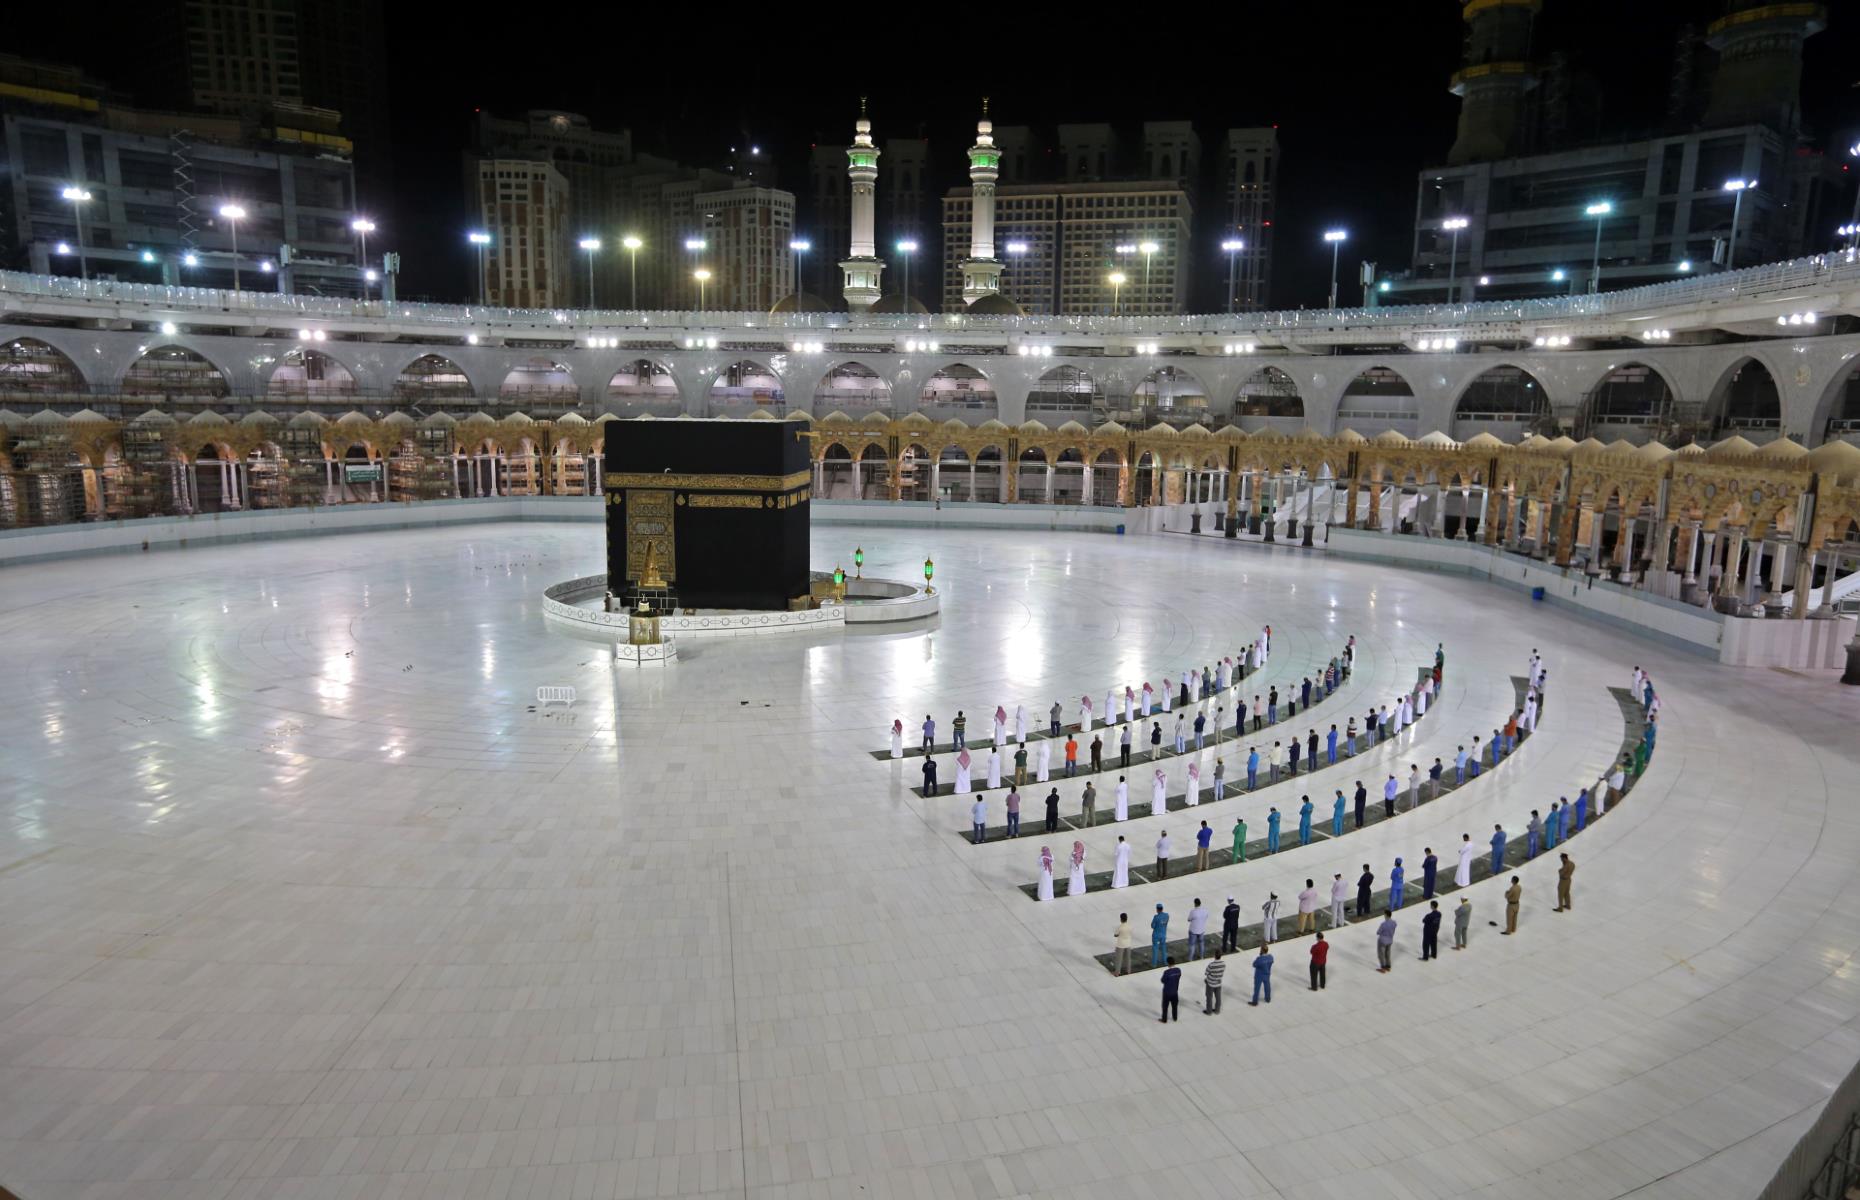 Mecca, Saudi Arabia: Reduced numbers in the Kaaba